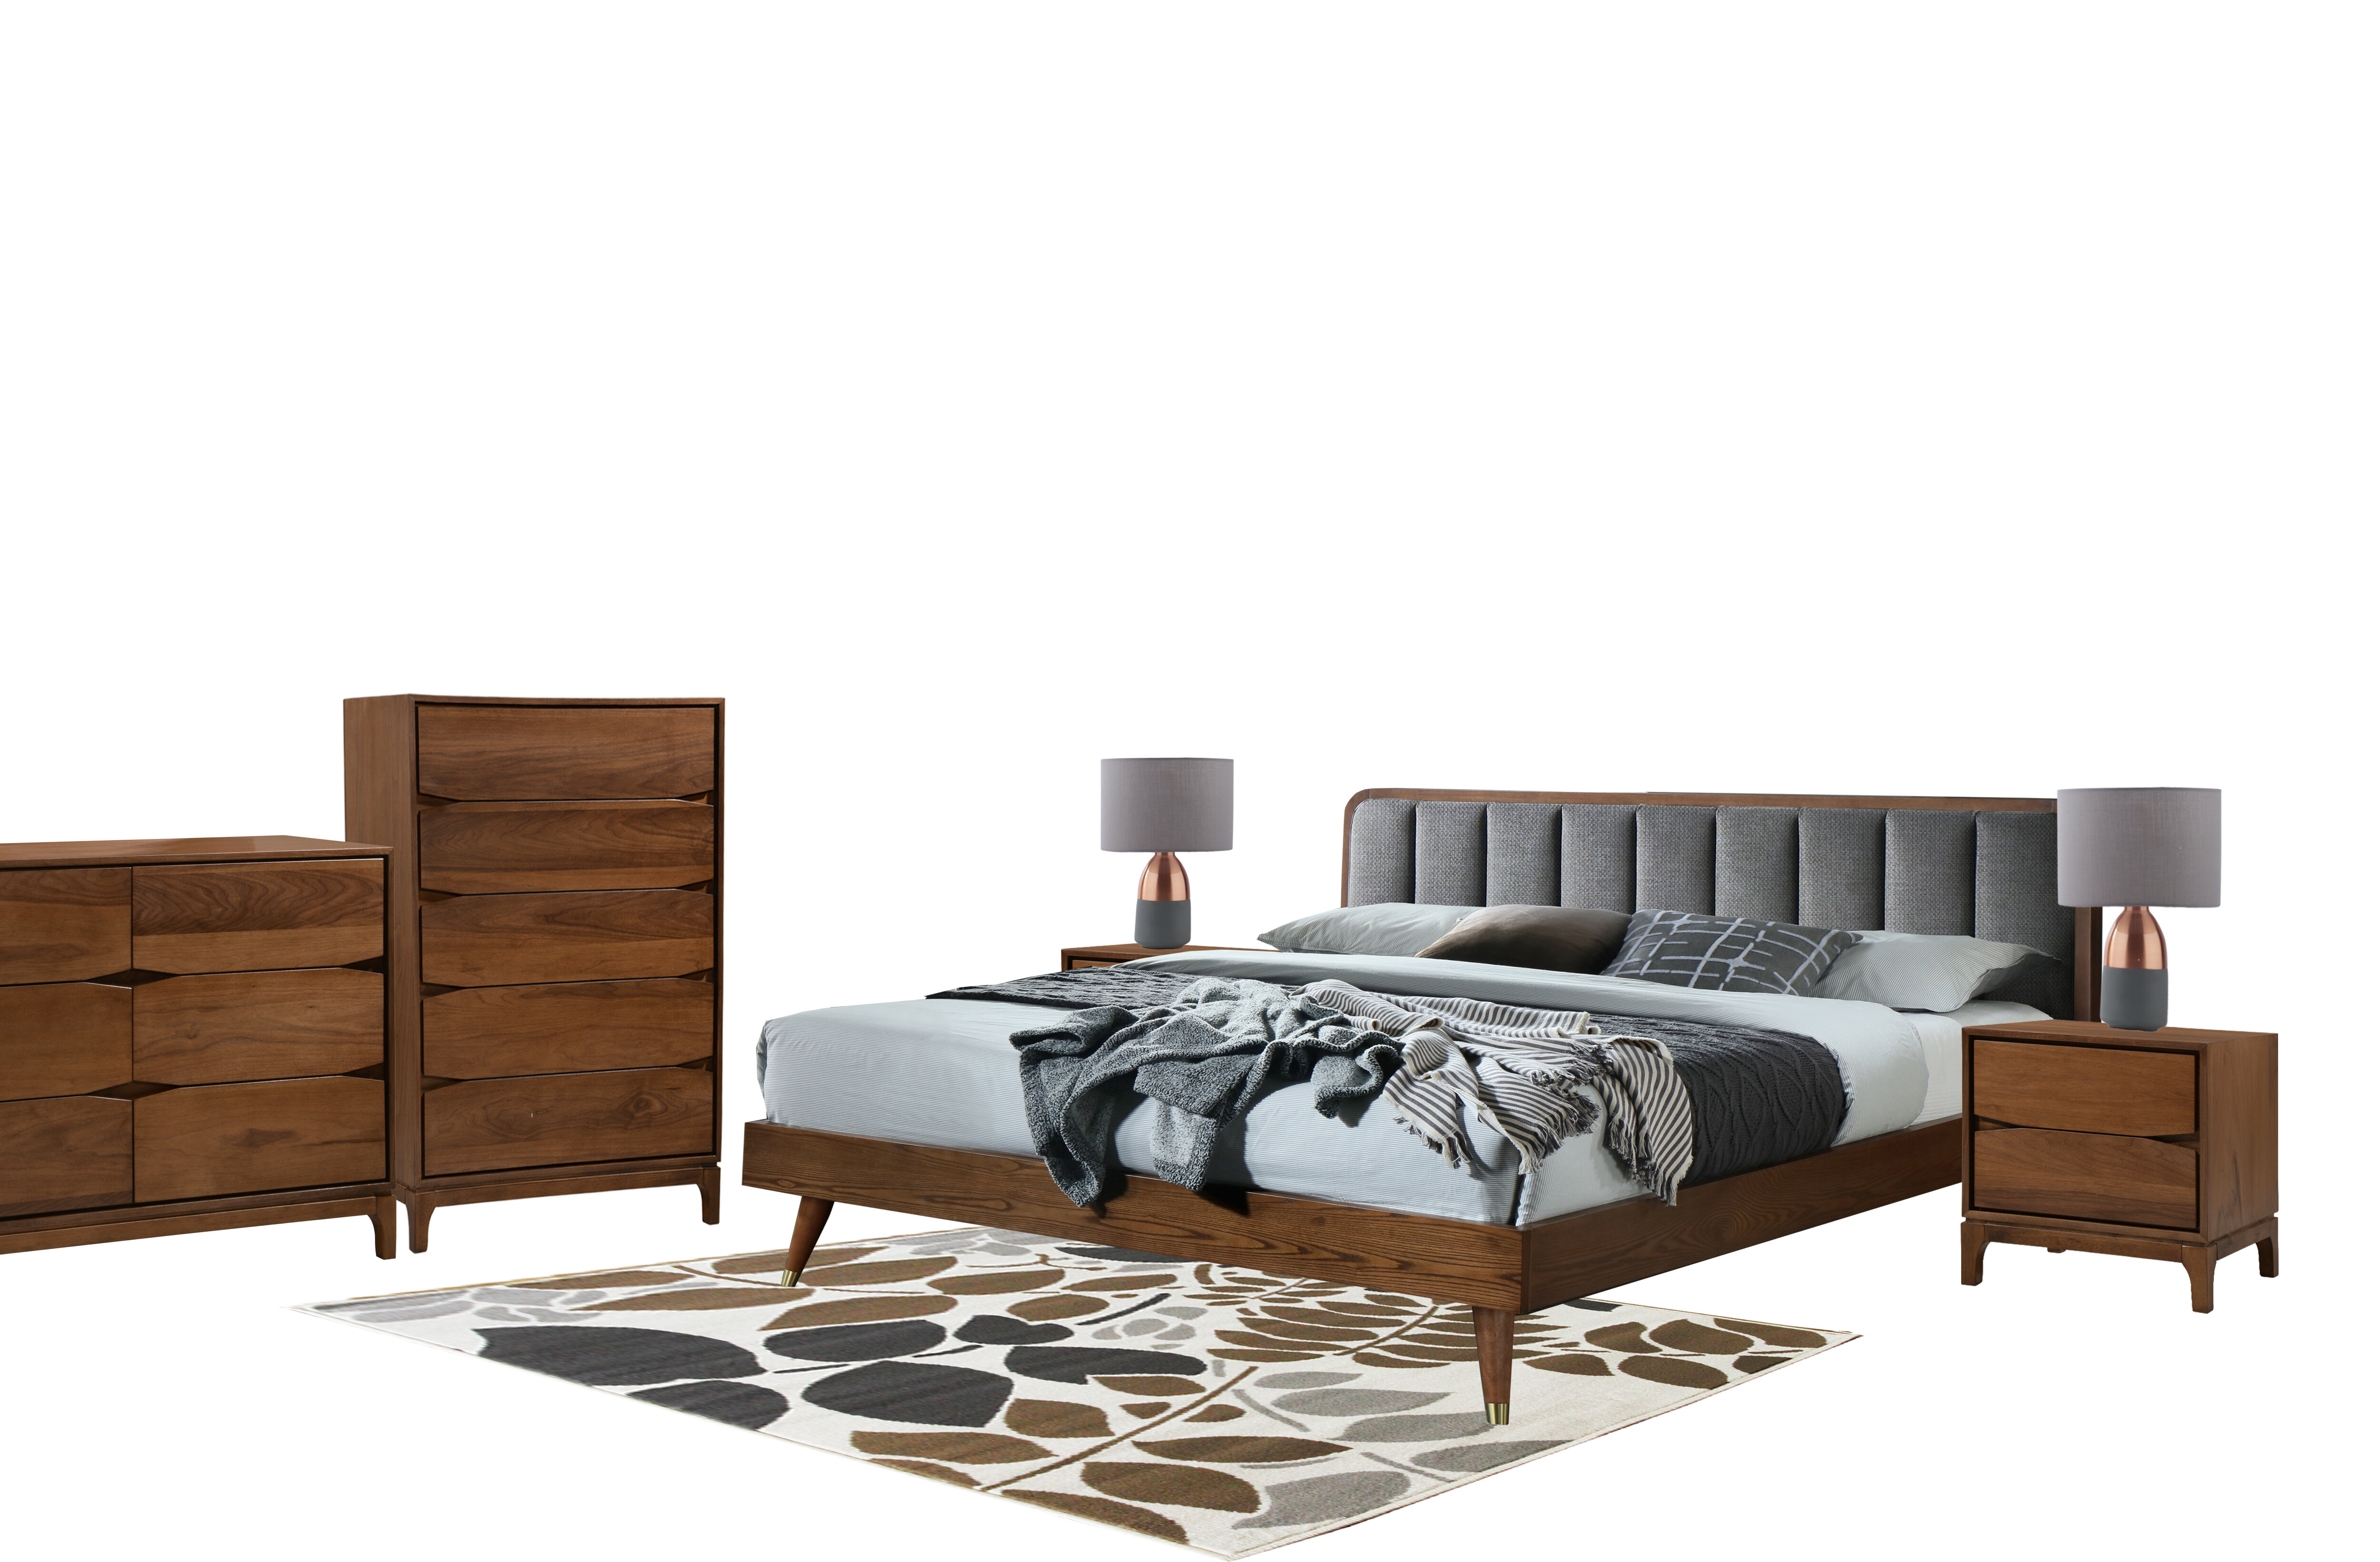 Mid Century Modern Bedroom Sets You Ll Love In 2021 Wayfair